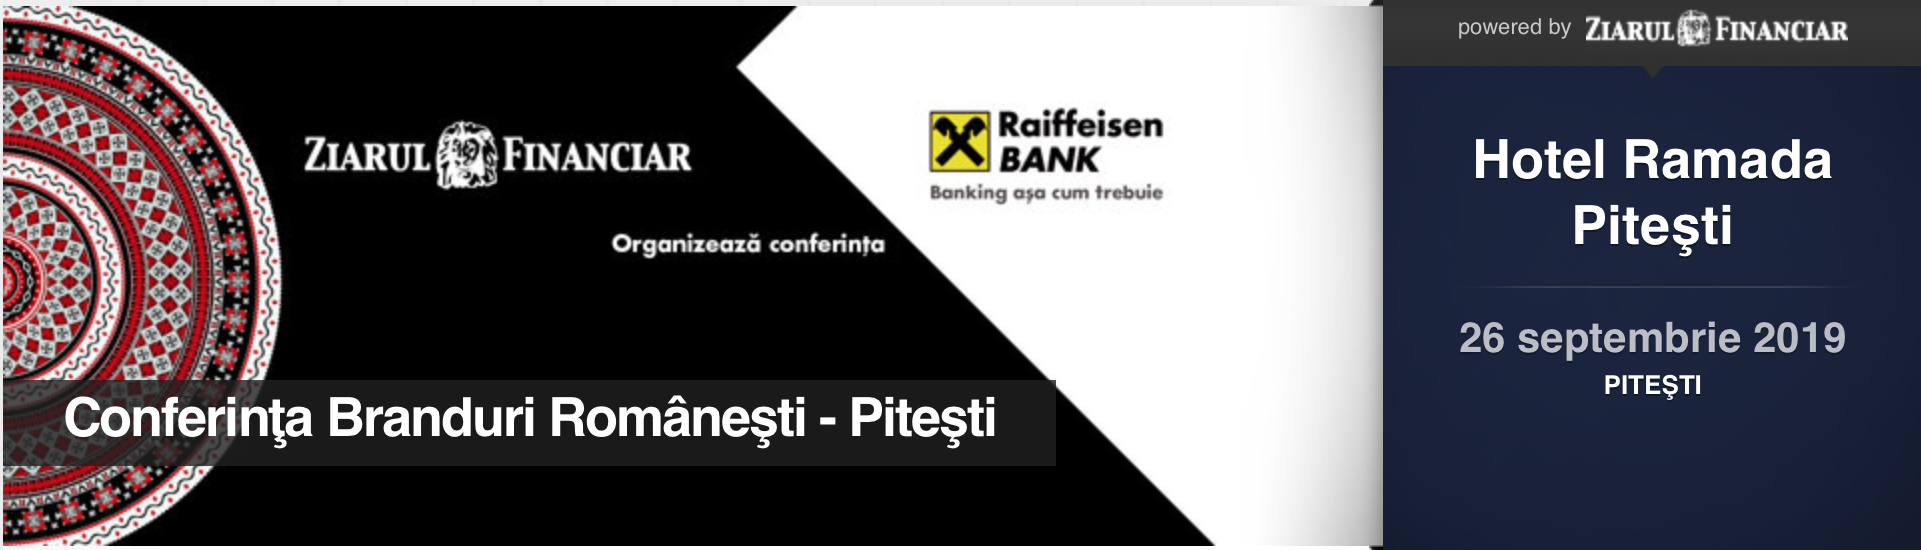 Conferința Zf Raiffeisen Branduri Romanești Pitești 26